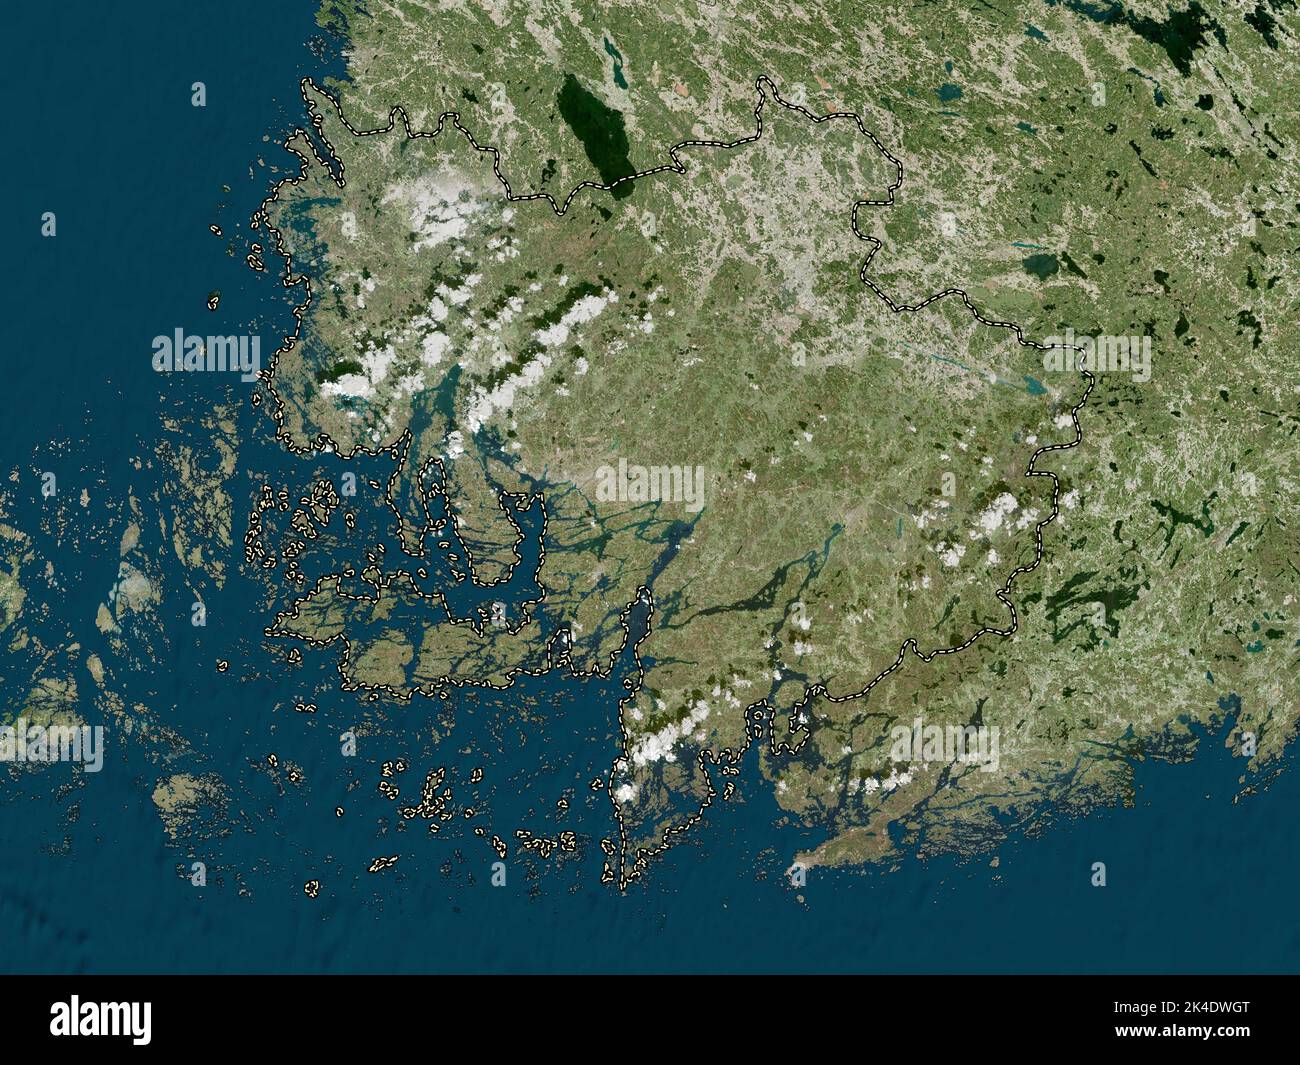 Southwest Finland, region of Finland. High resolution satellite map Stock Photo